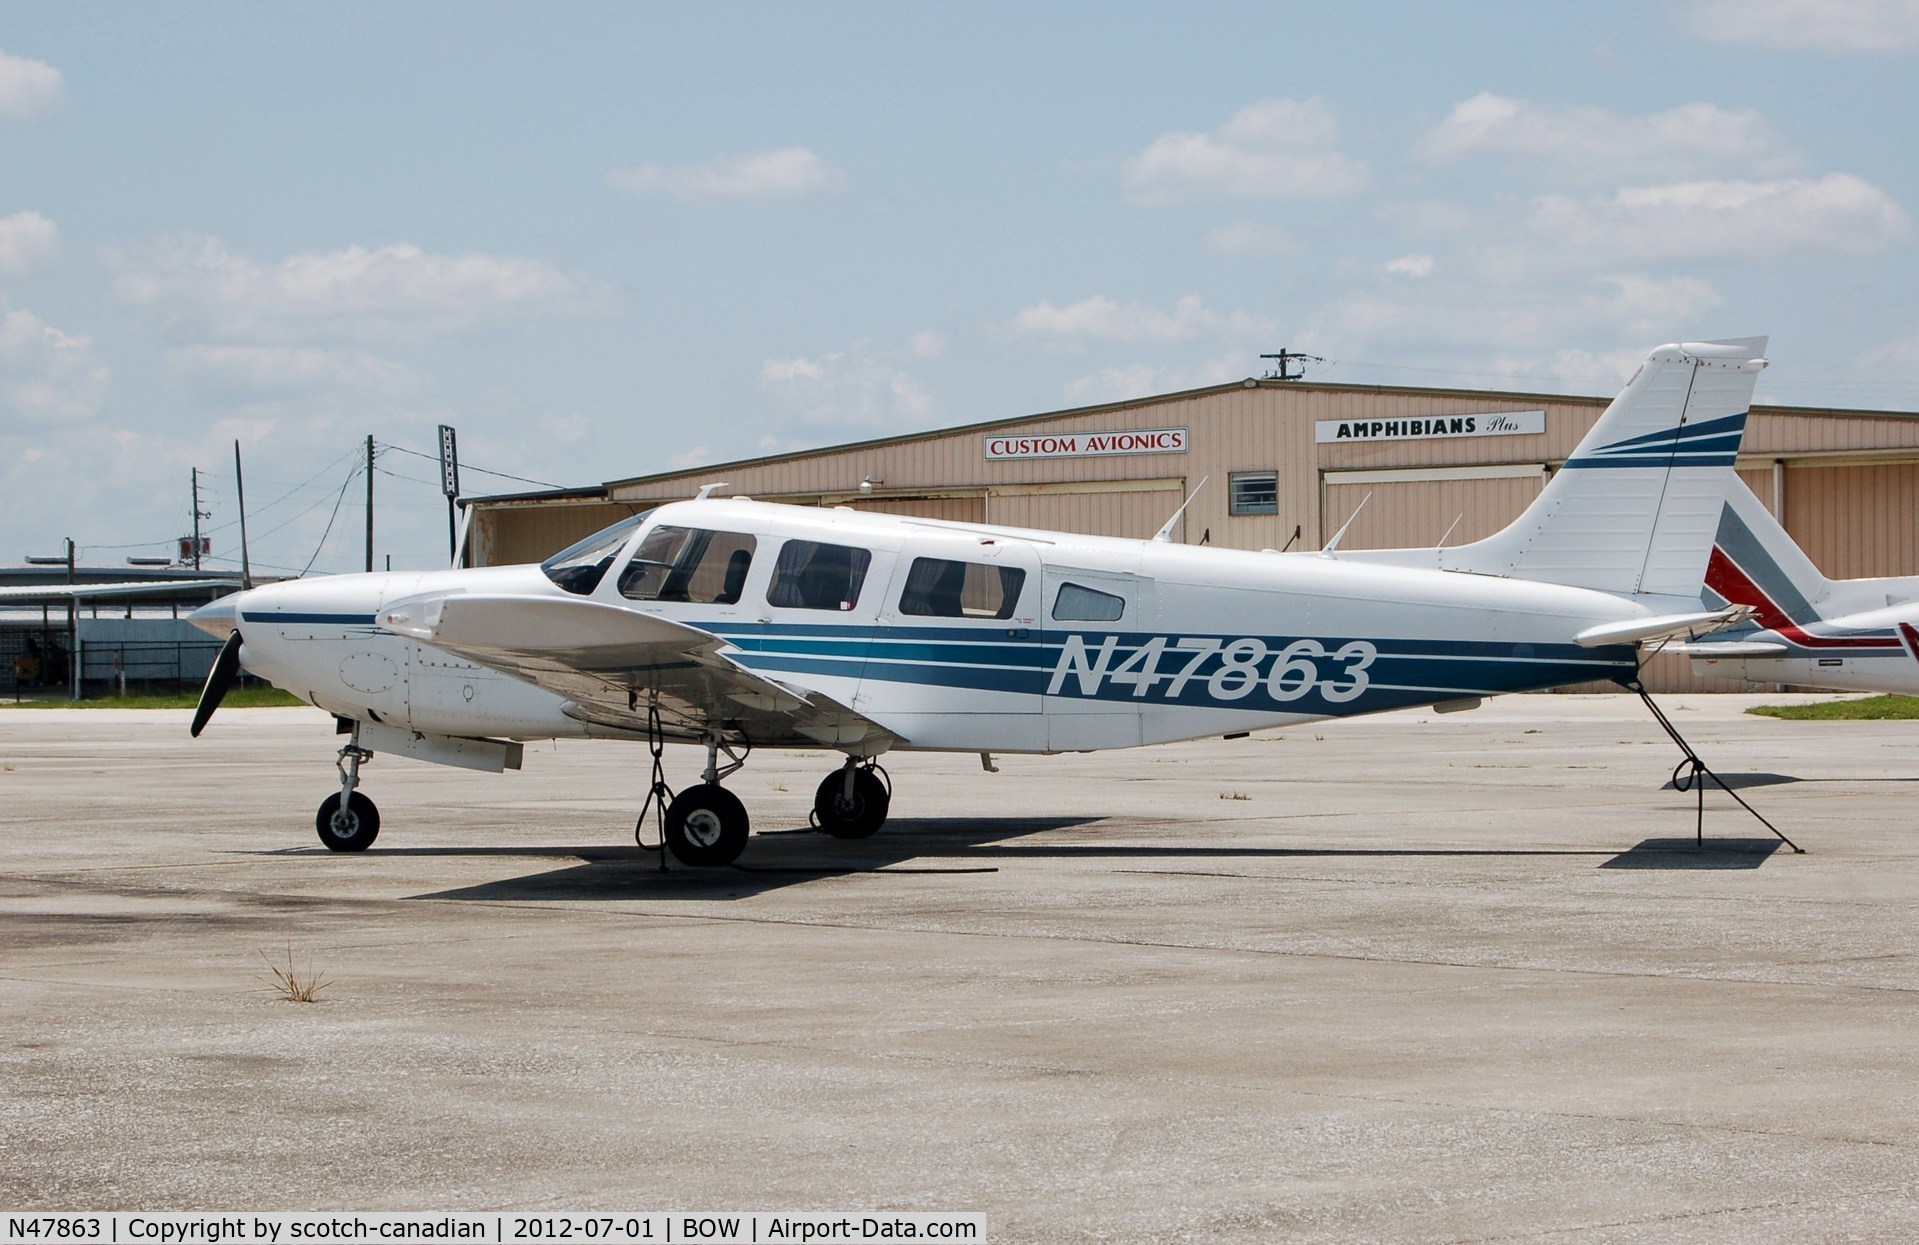 N47863, 1977 Piper PA-32R-300 Cherokee Lance C/N 32R-7880025, 1977 Piper PA-32R-300 N47963 at Bartow Municipal Airport, Bartow, FL